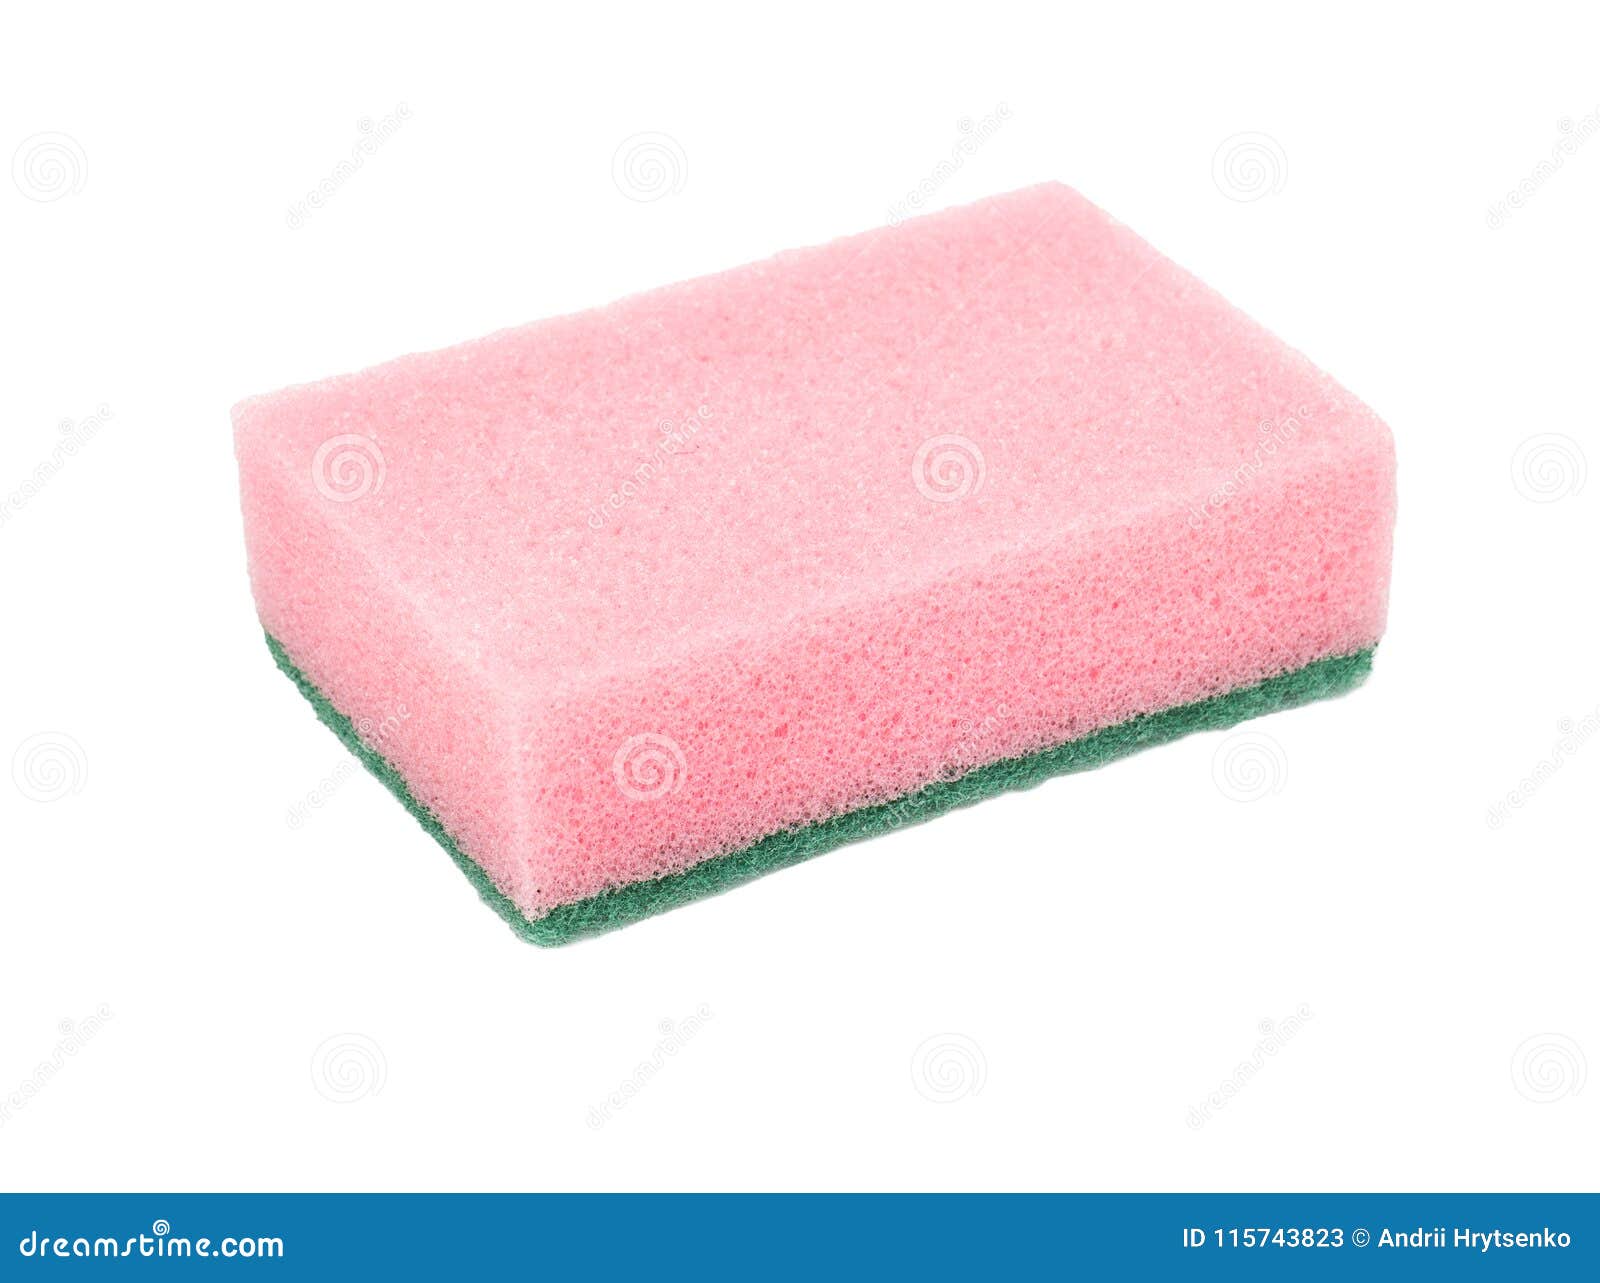 https://thumbs.dreamstime.com/z/dish-washing-sponge-pink-white-background-115743823.jpg